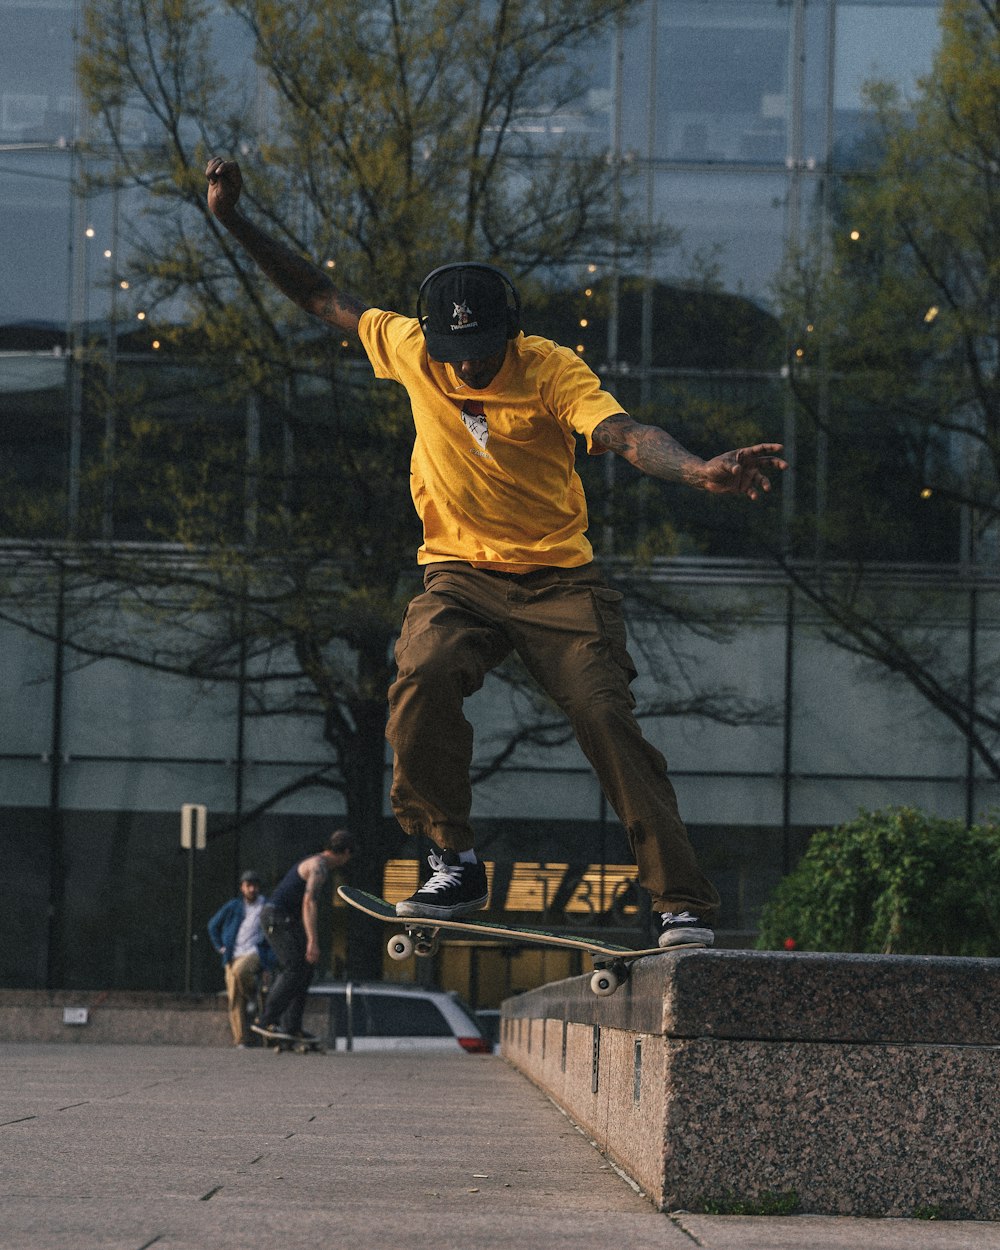 man in yellow shirt and brown pants playing skateboard